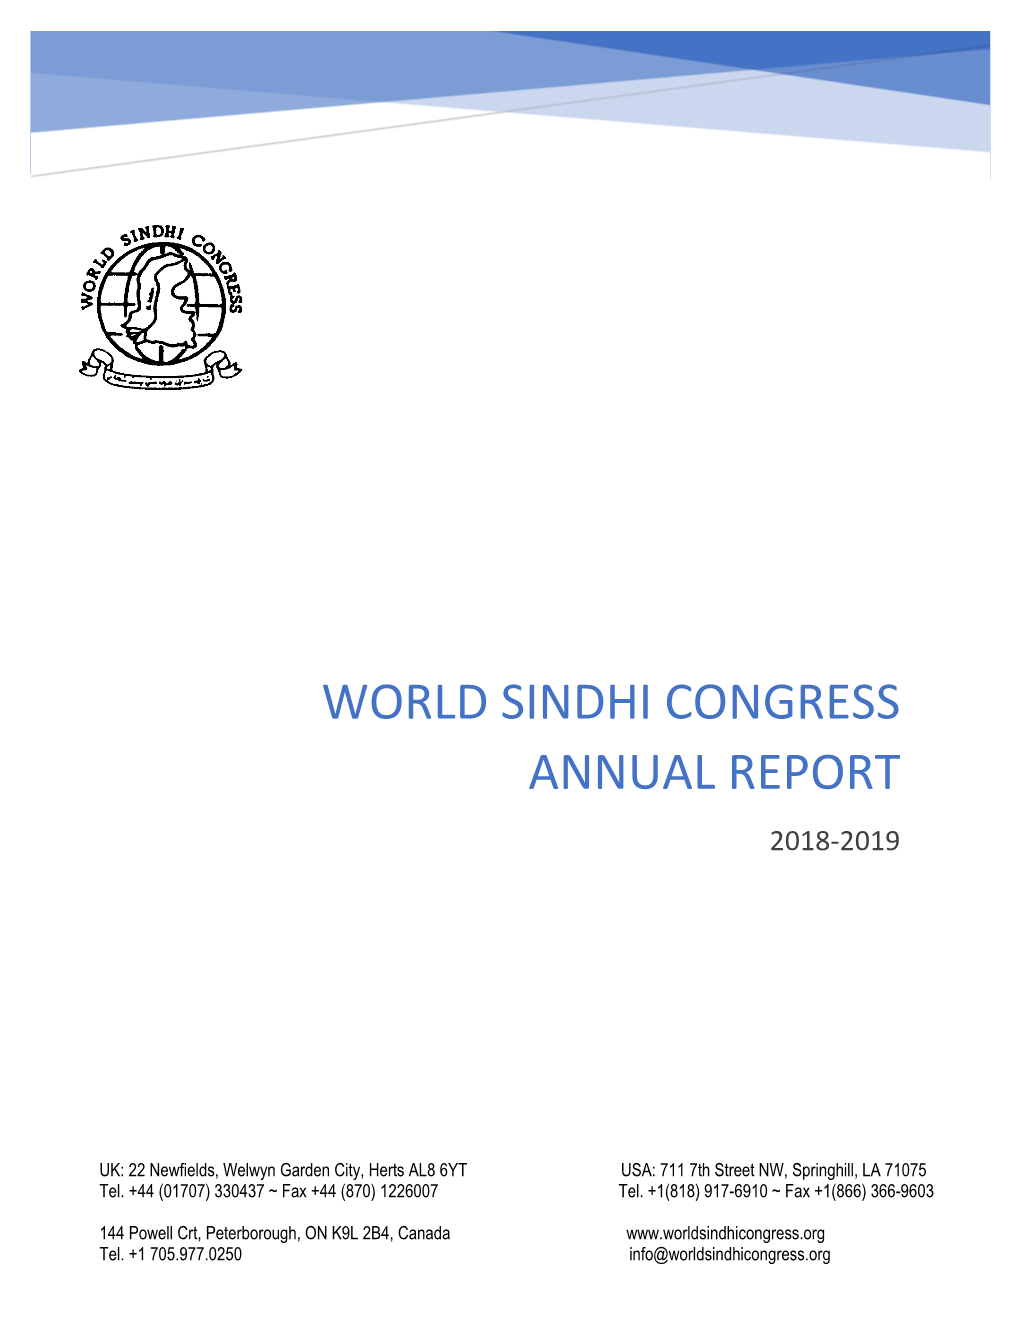 World Sindhi Congress Annual Report 2018-2019